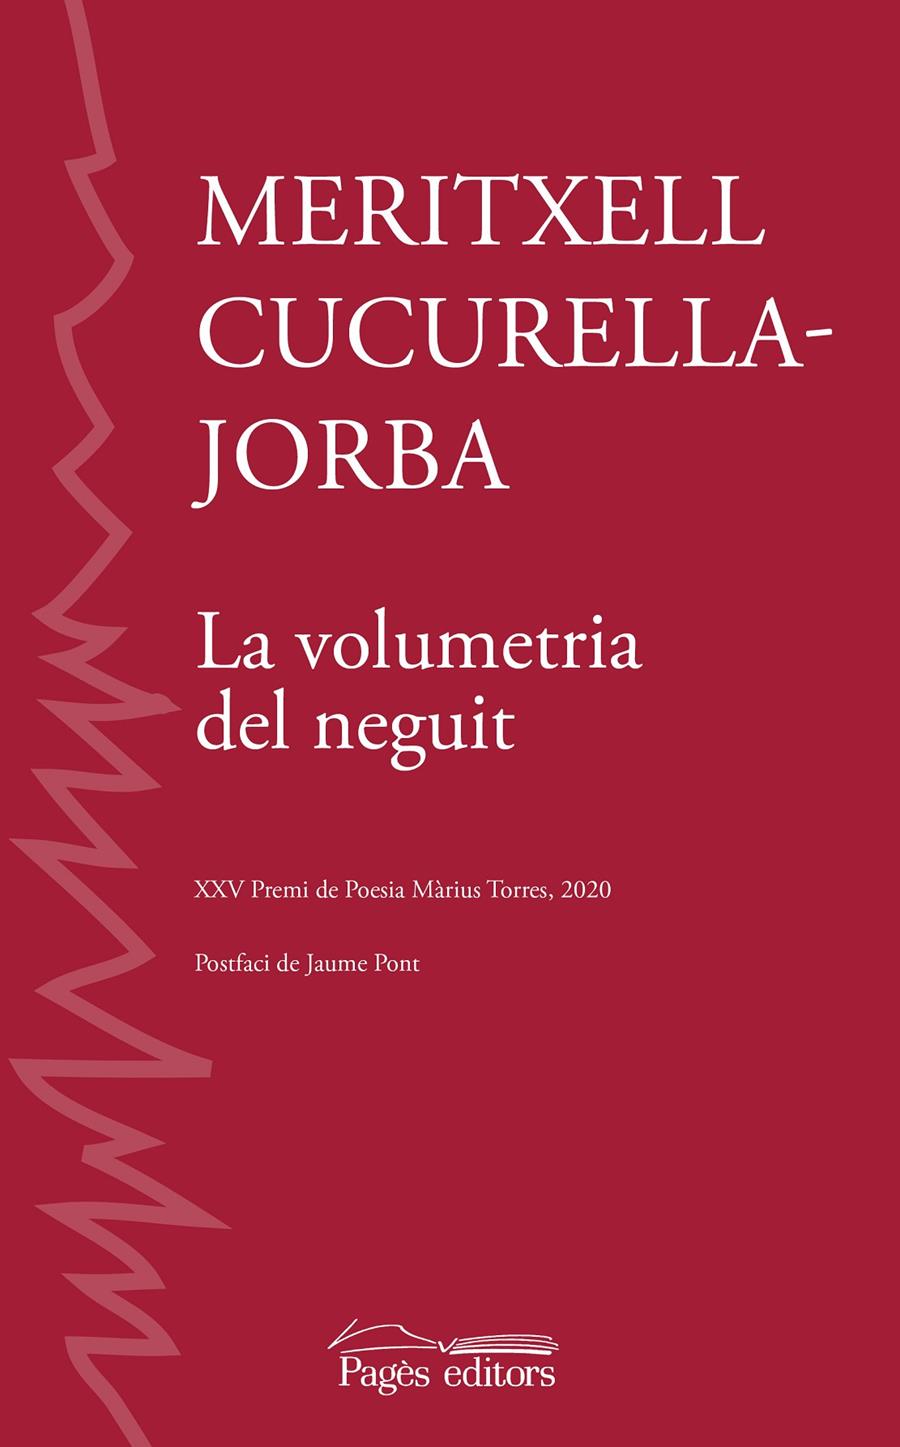 La volumetria del neguit | Cucurella-Jorba, Meritxell | Cooperativa autogestionària